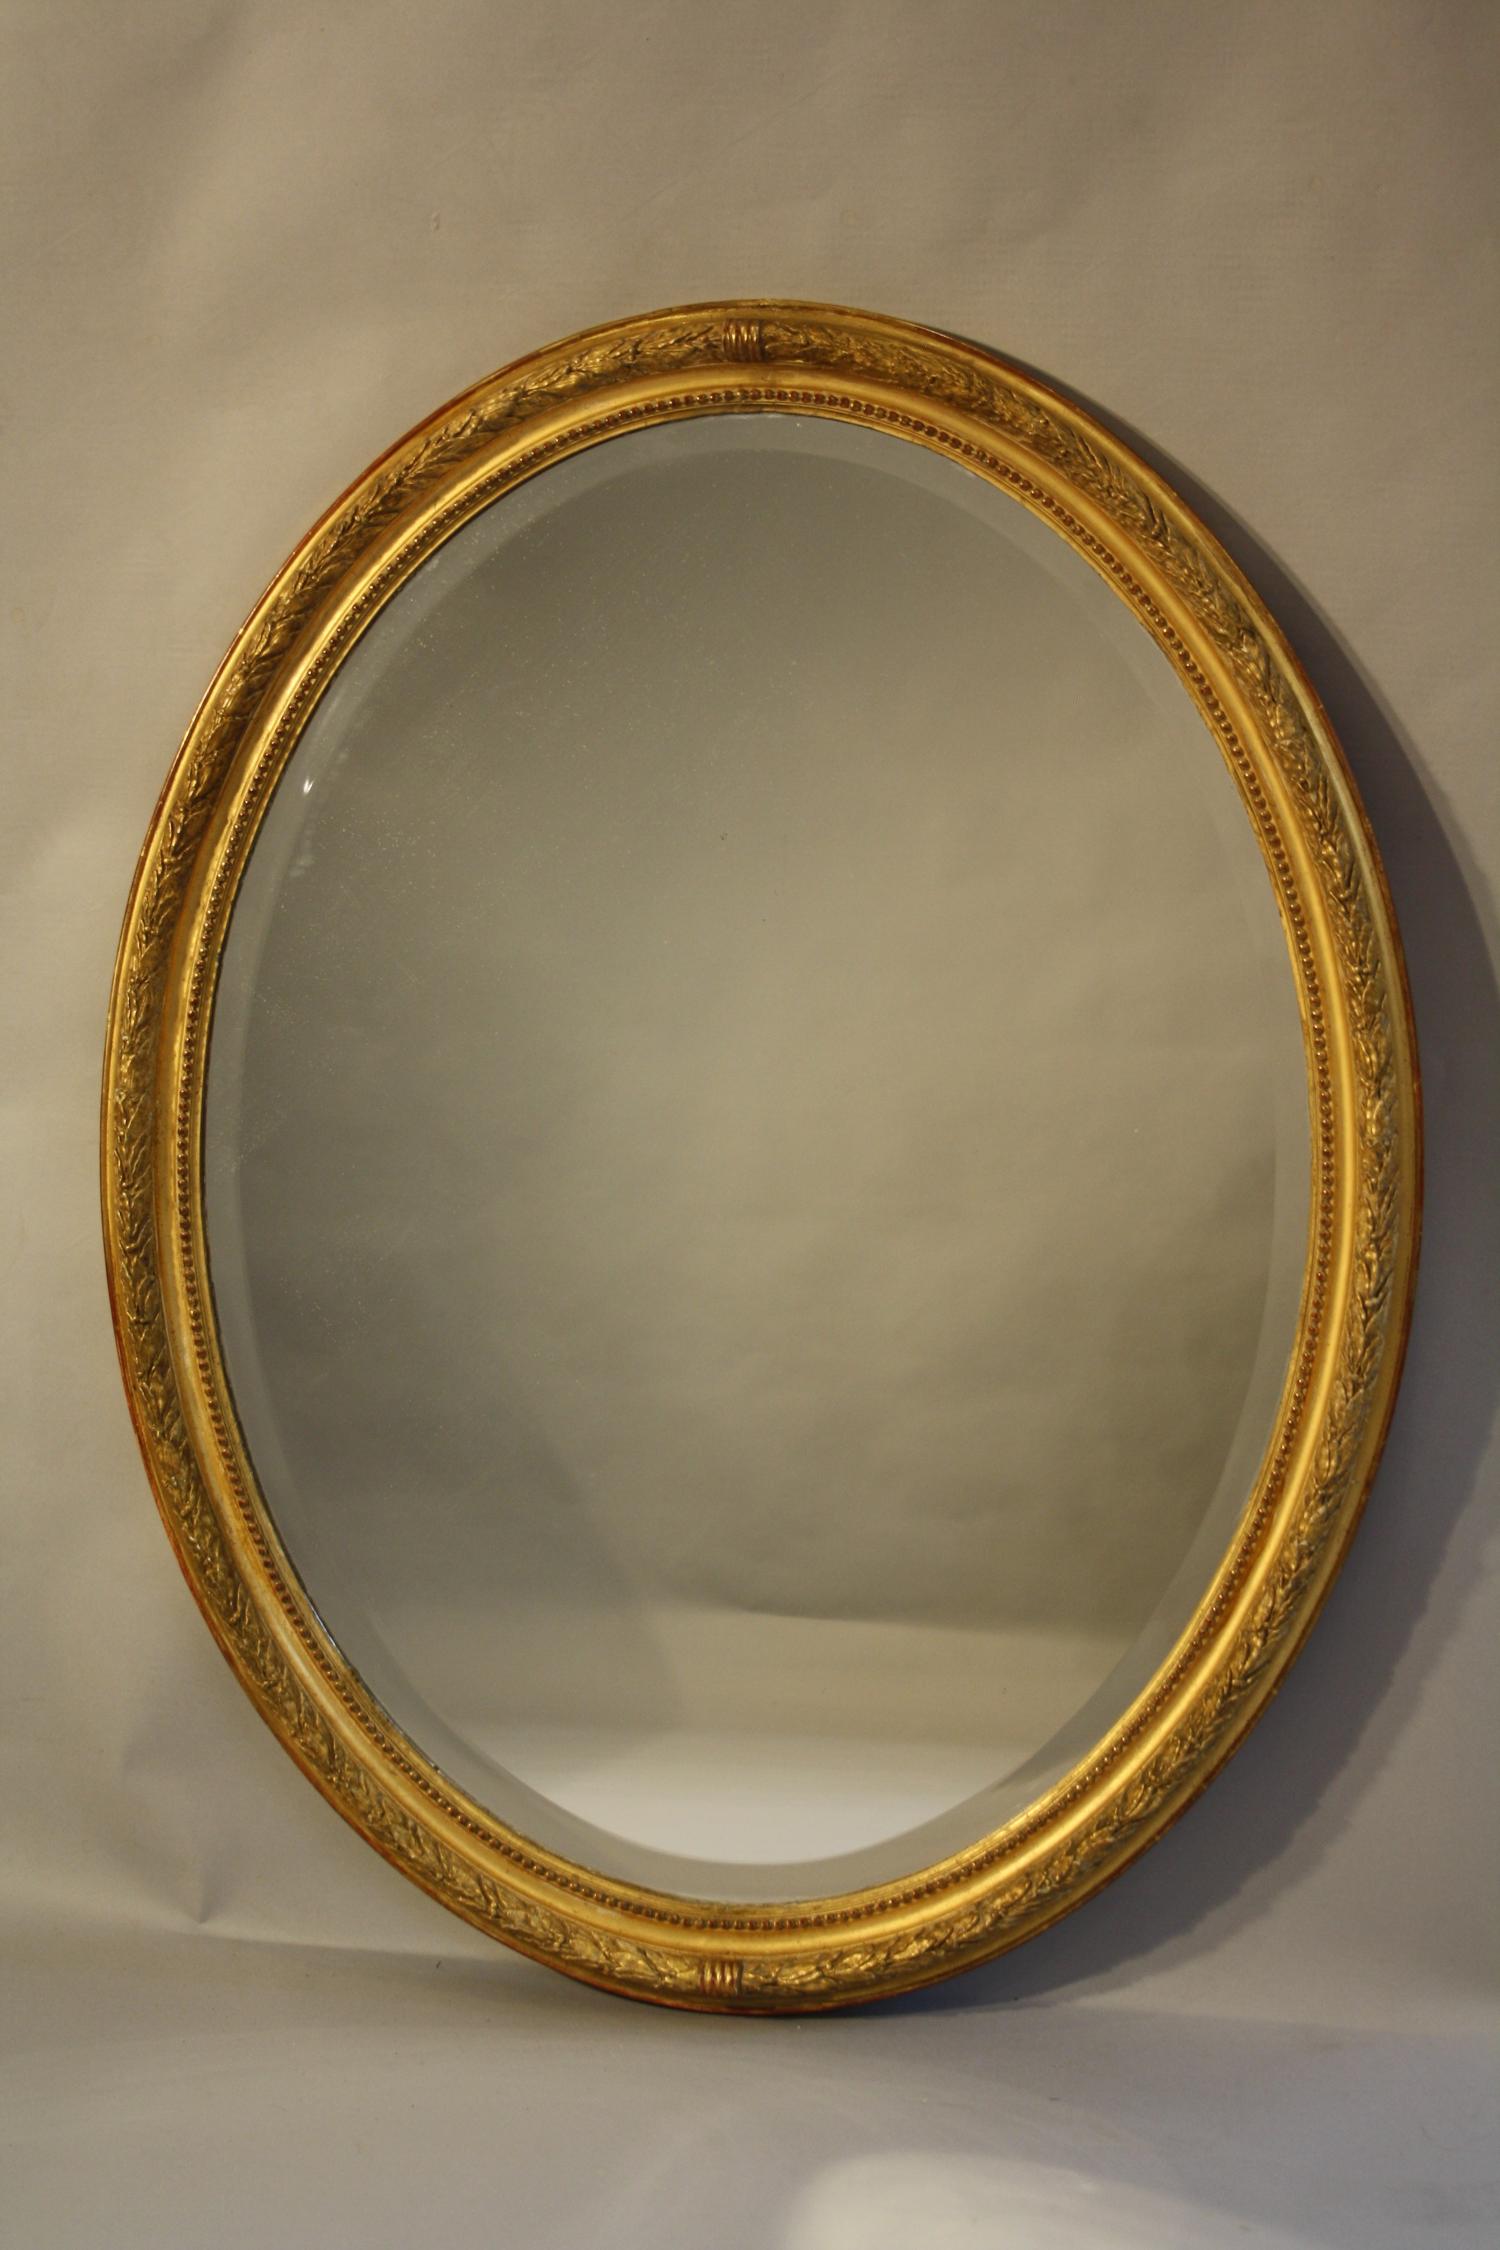 C19th Oval mirror